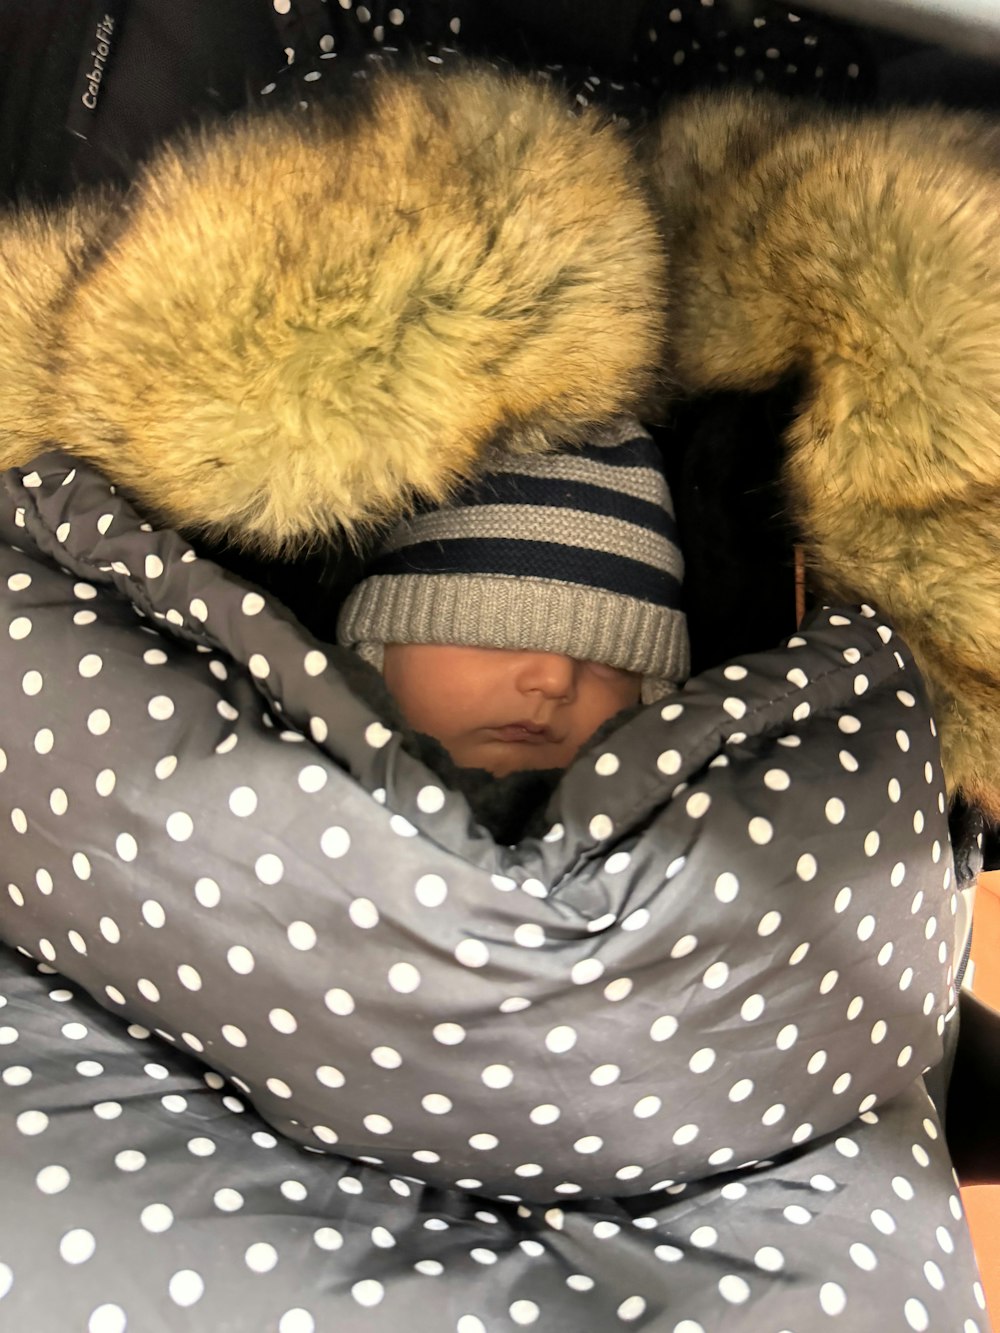 a baby is sleeping in a polka dot blanket